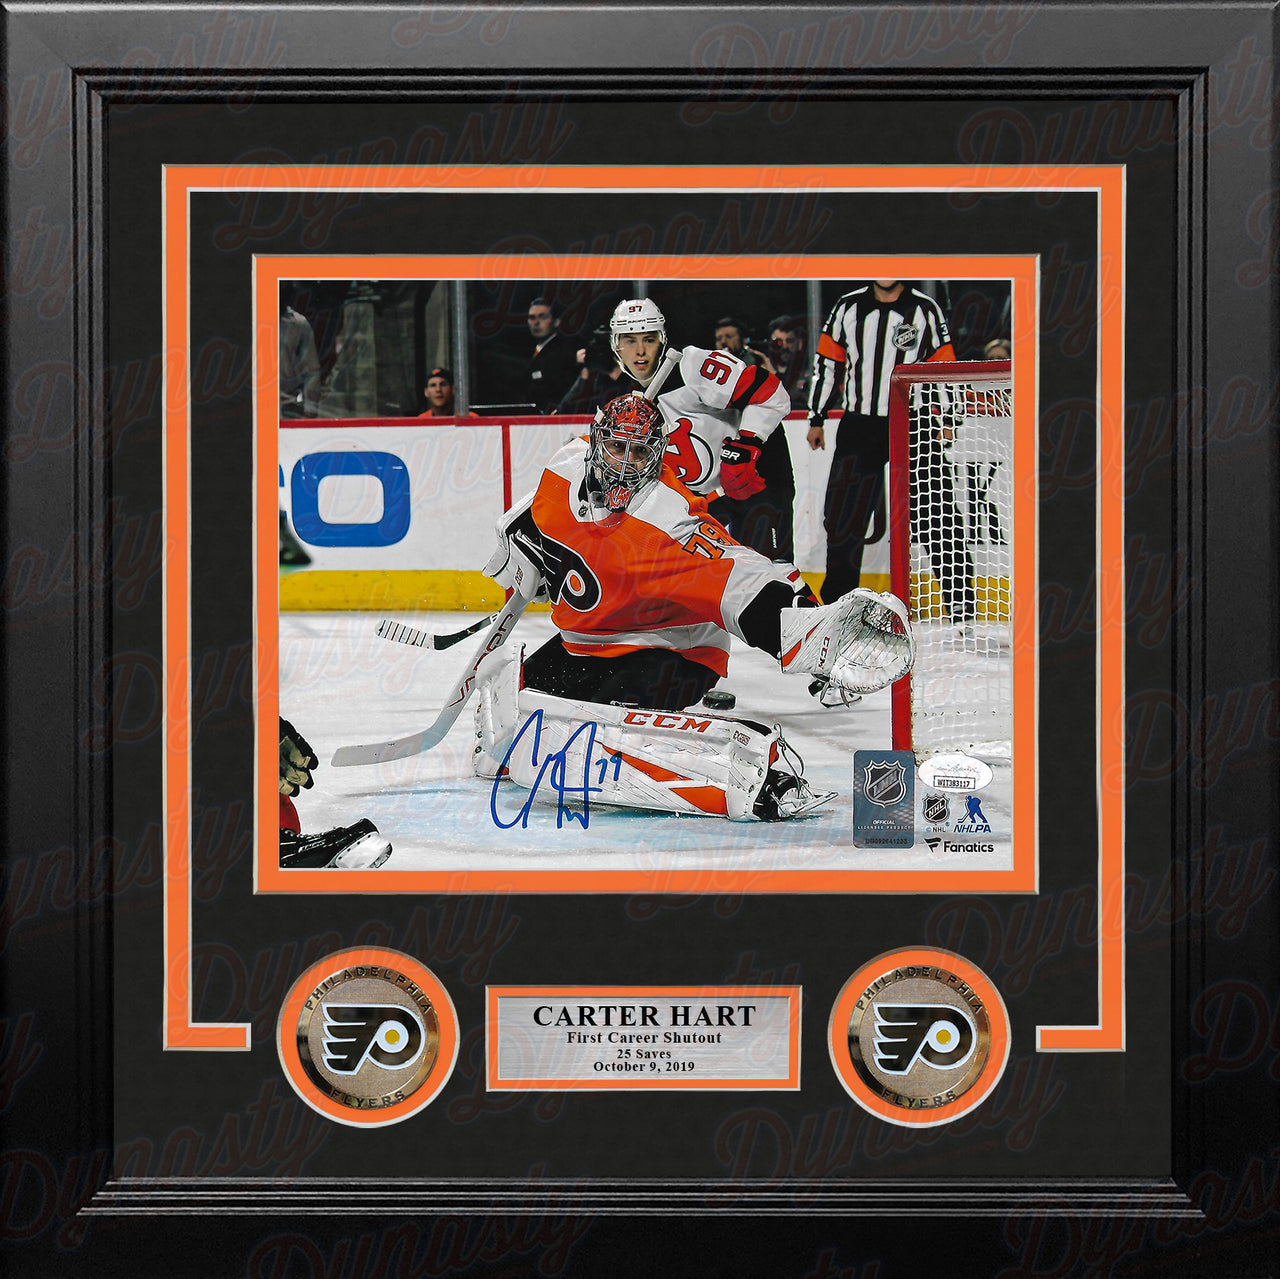 Carter Hart Philadelphia Flyers First Career Shutout Autographed Framed Hockey Photo - Dynasty Sports & Framing 